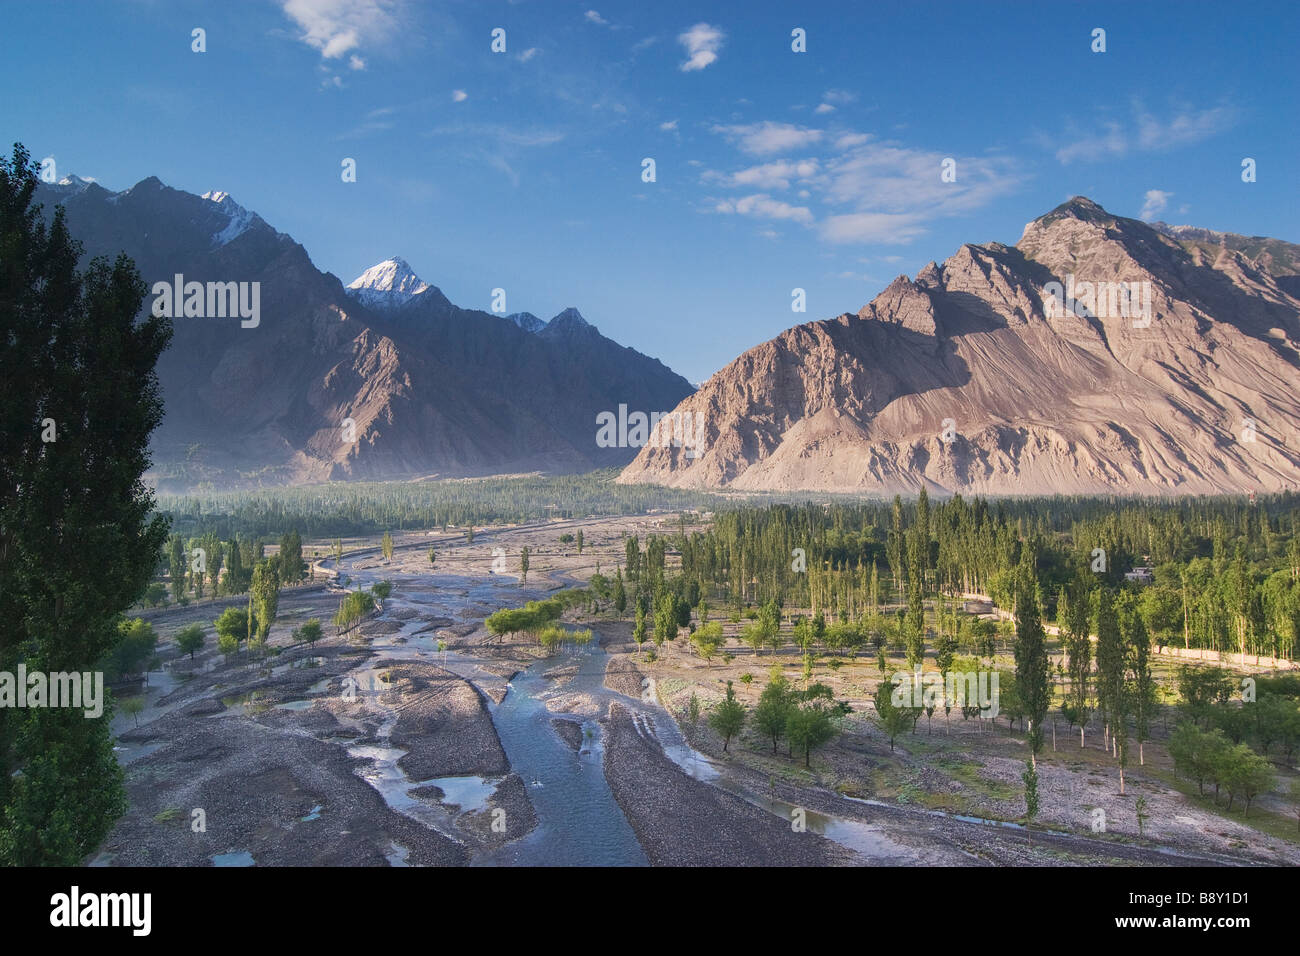 River passing through a valley, Skardu, Karakoram Range, Pakistan Stock Photo